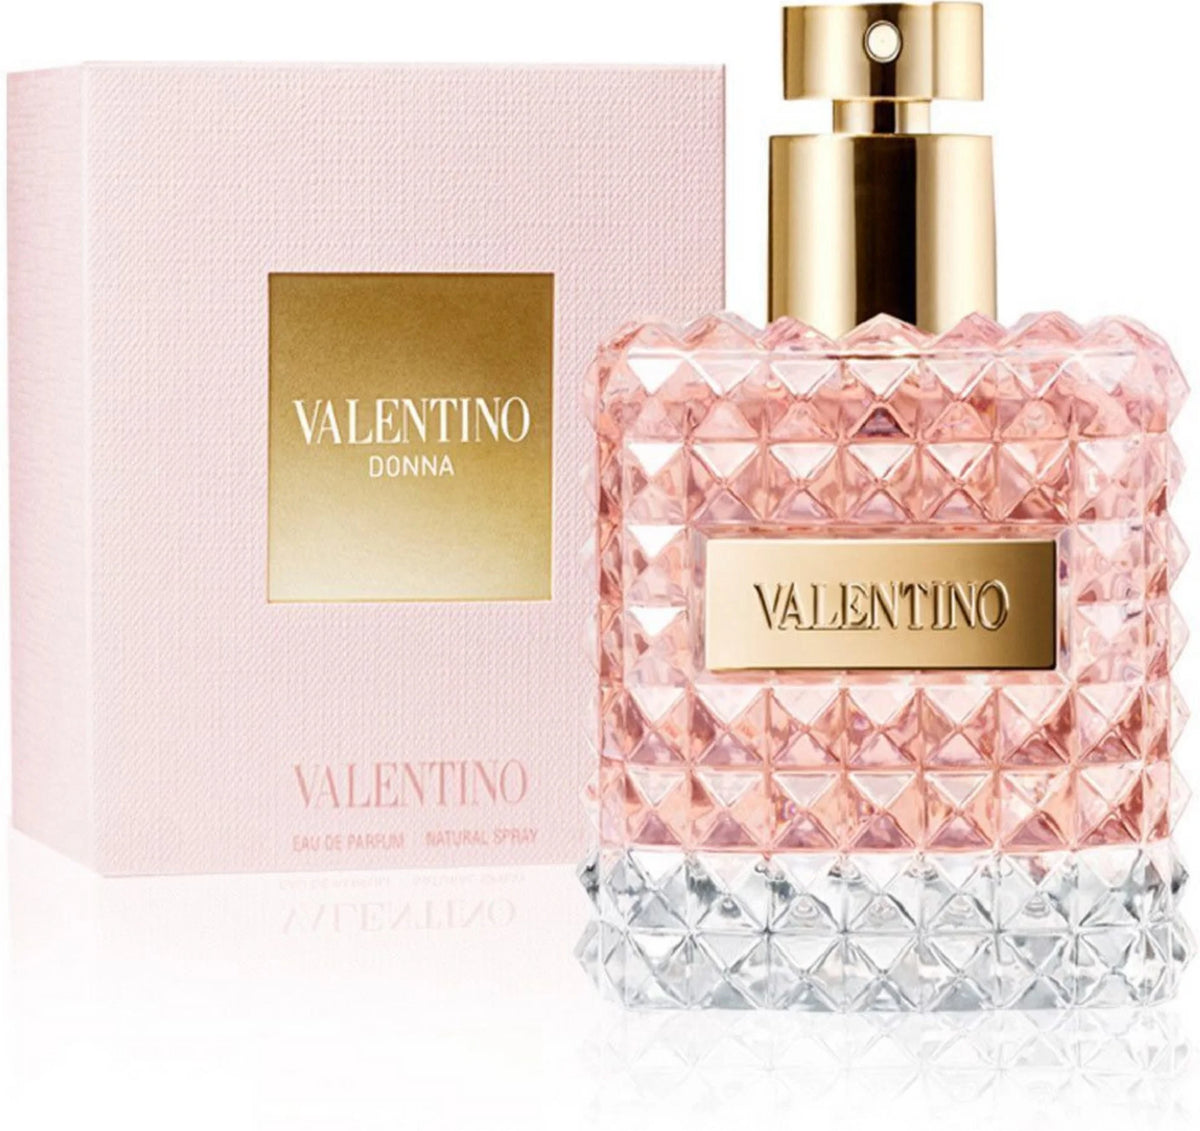 Valentino Donna for Women - Eau De Parfum - 100ml